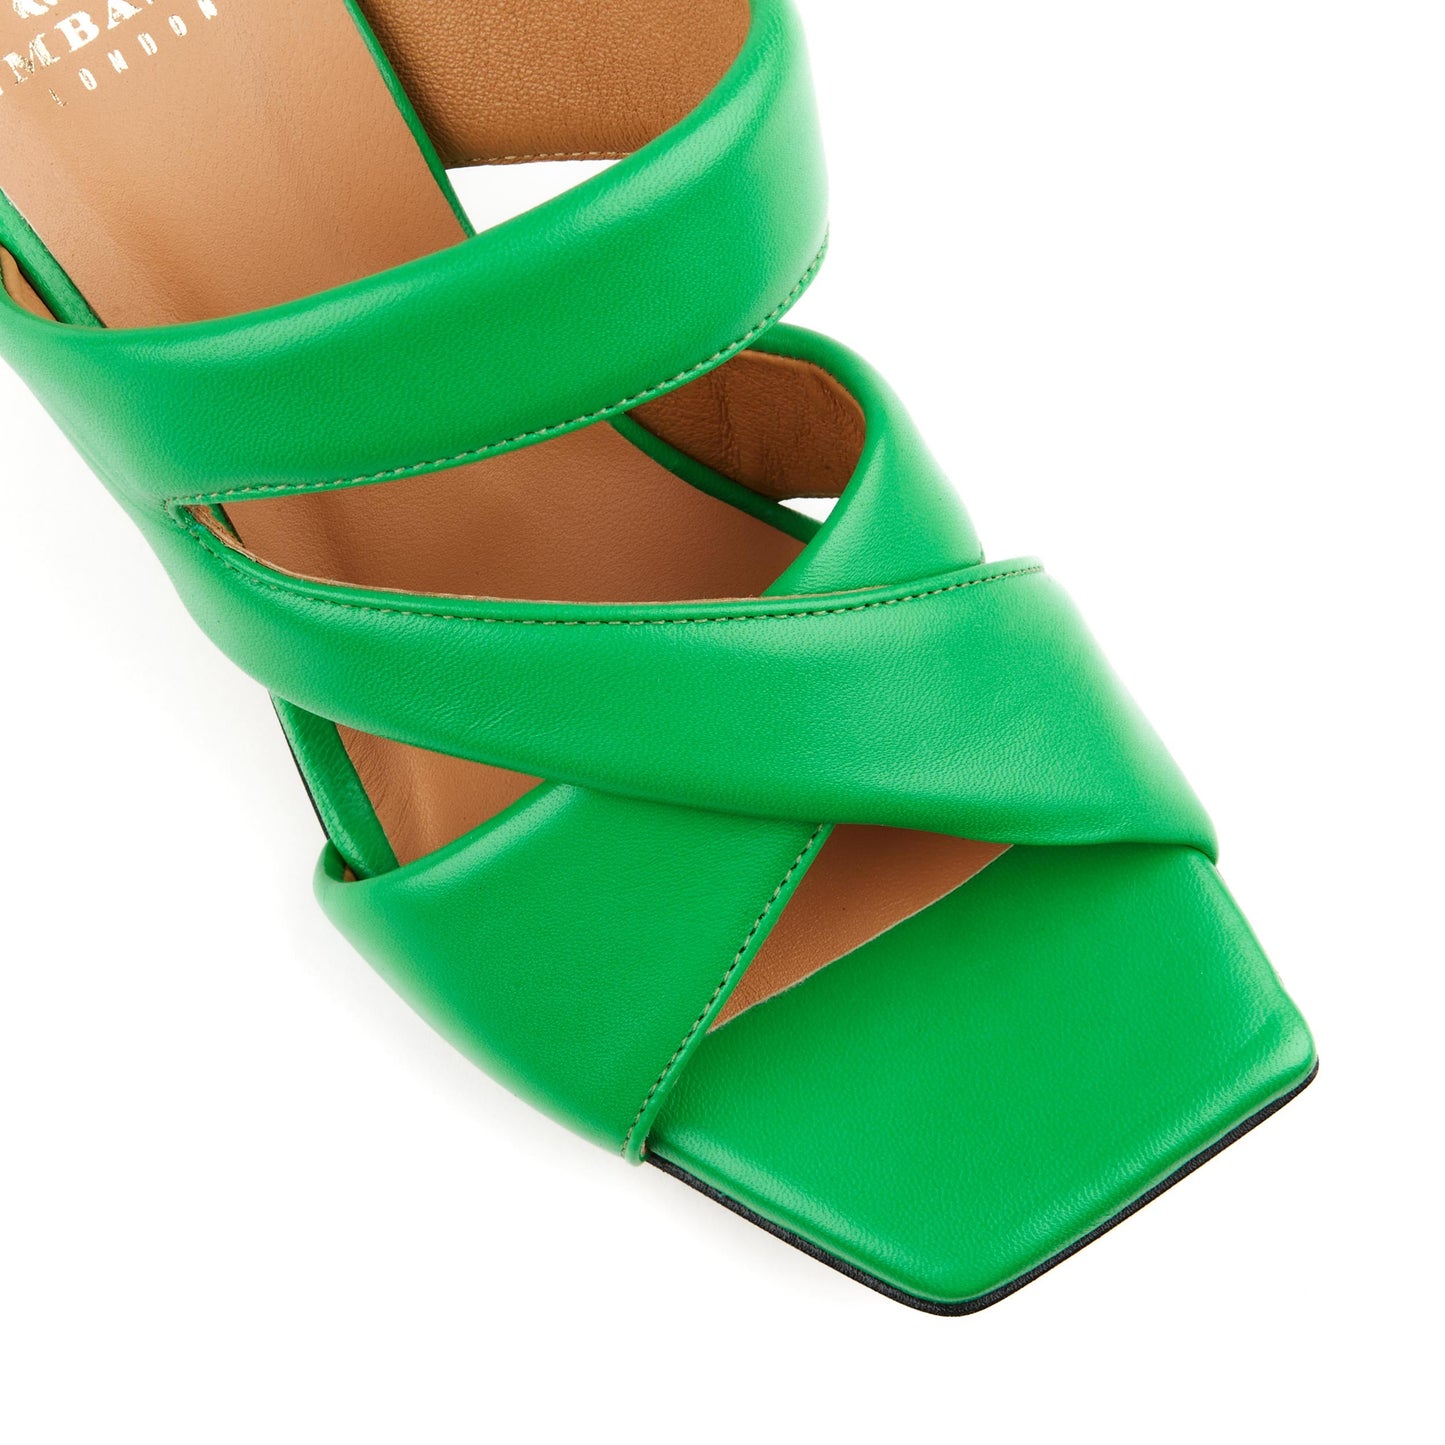 Oriana - Bright Green Heels Embassy London 